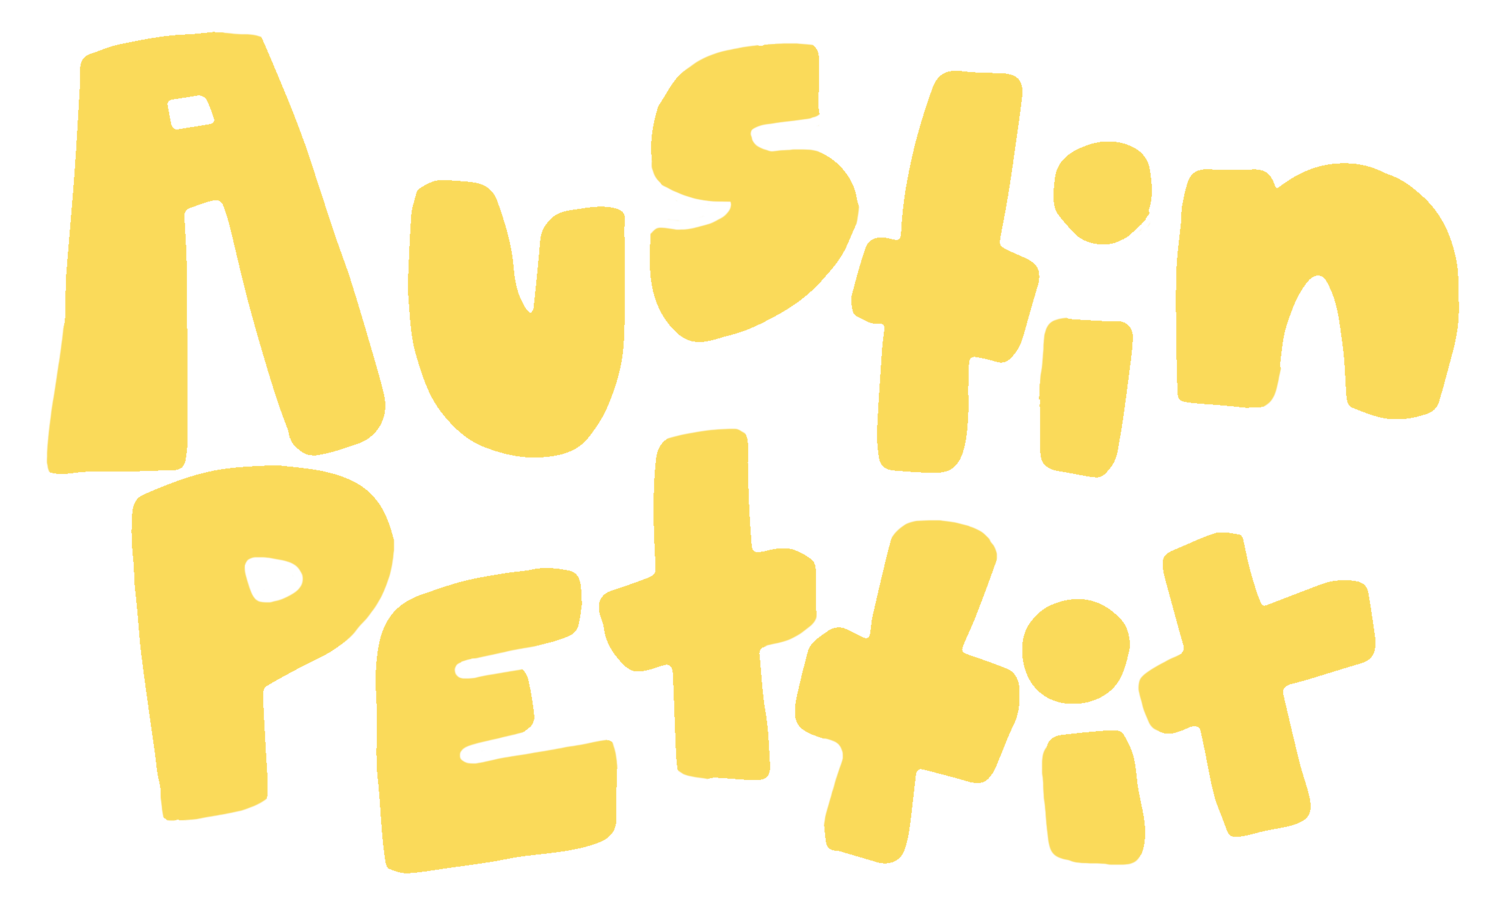 Austin Pettit